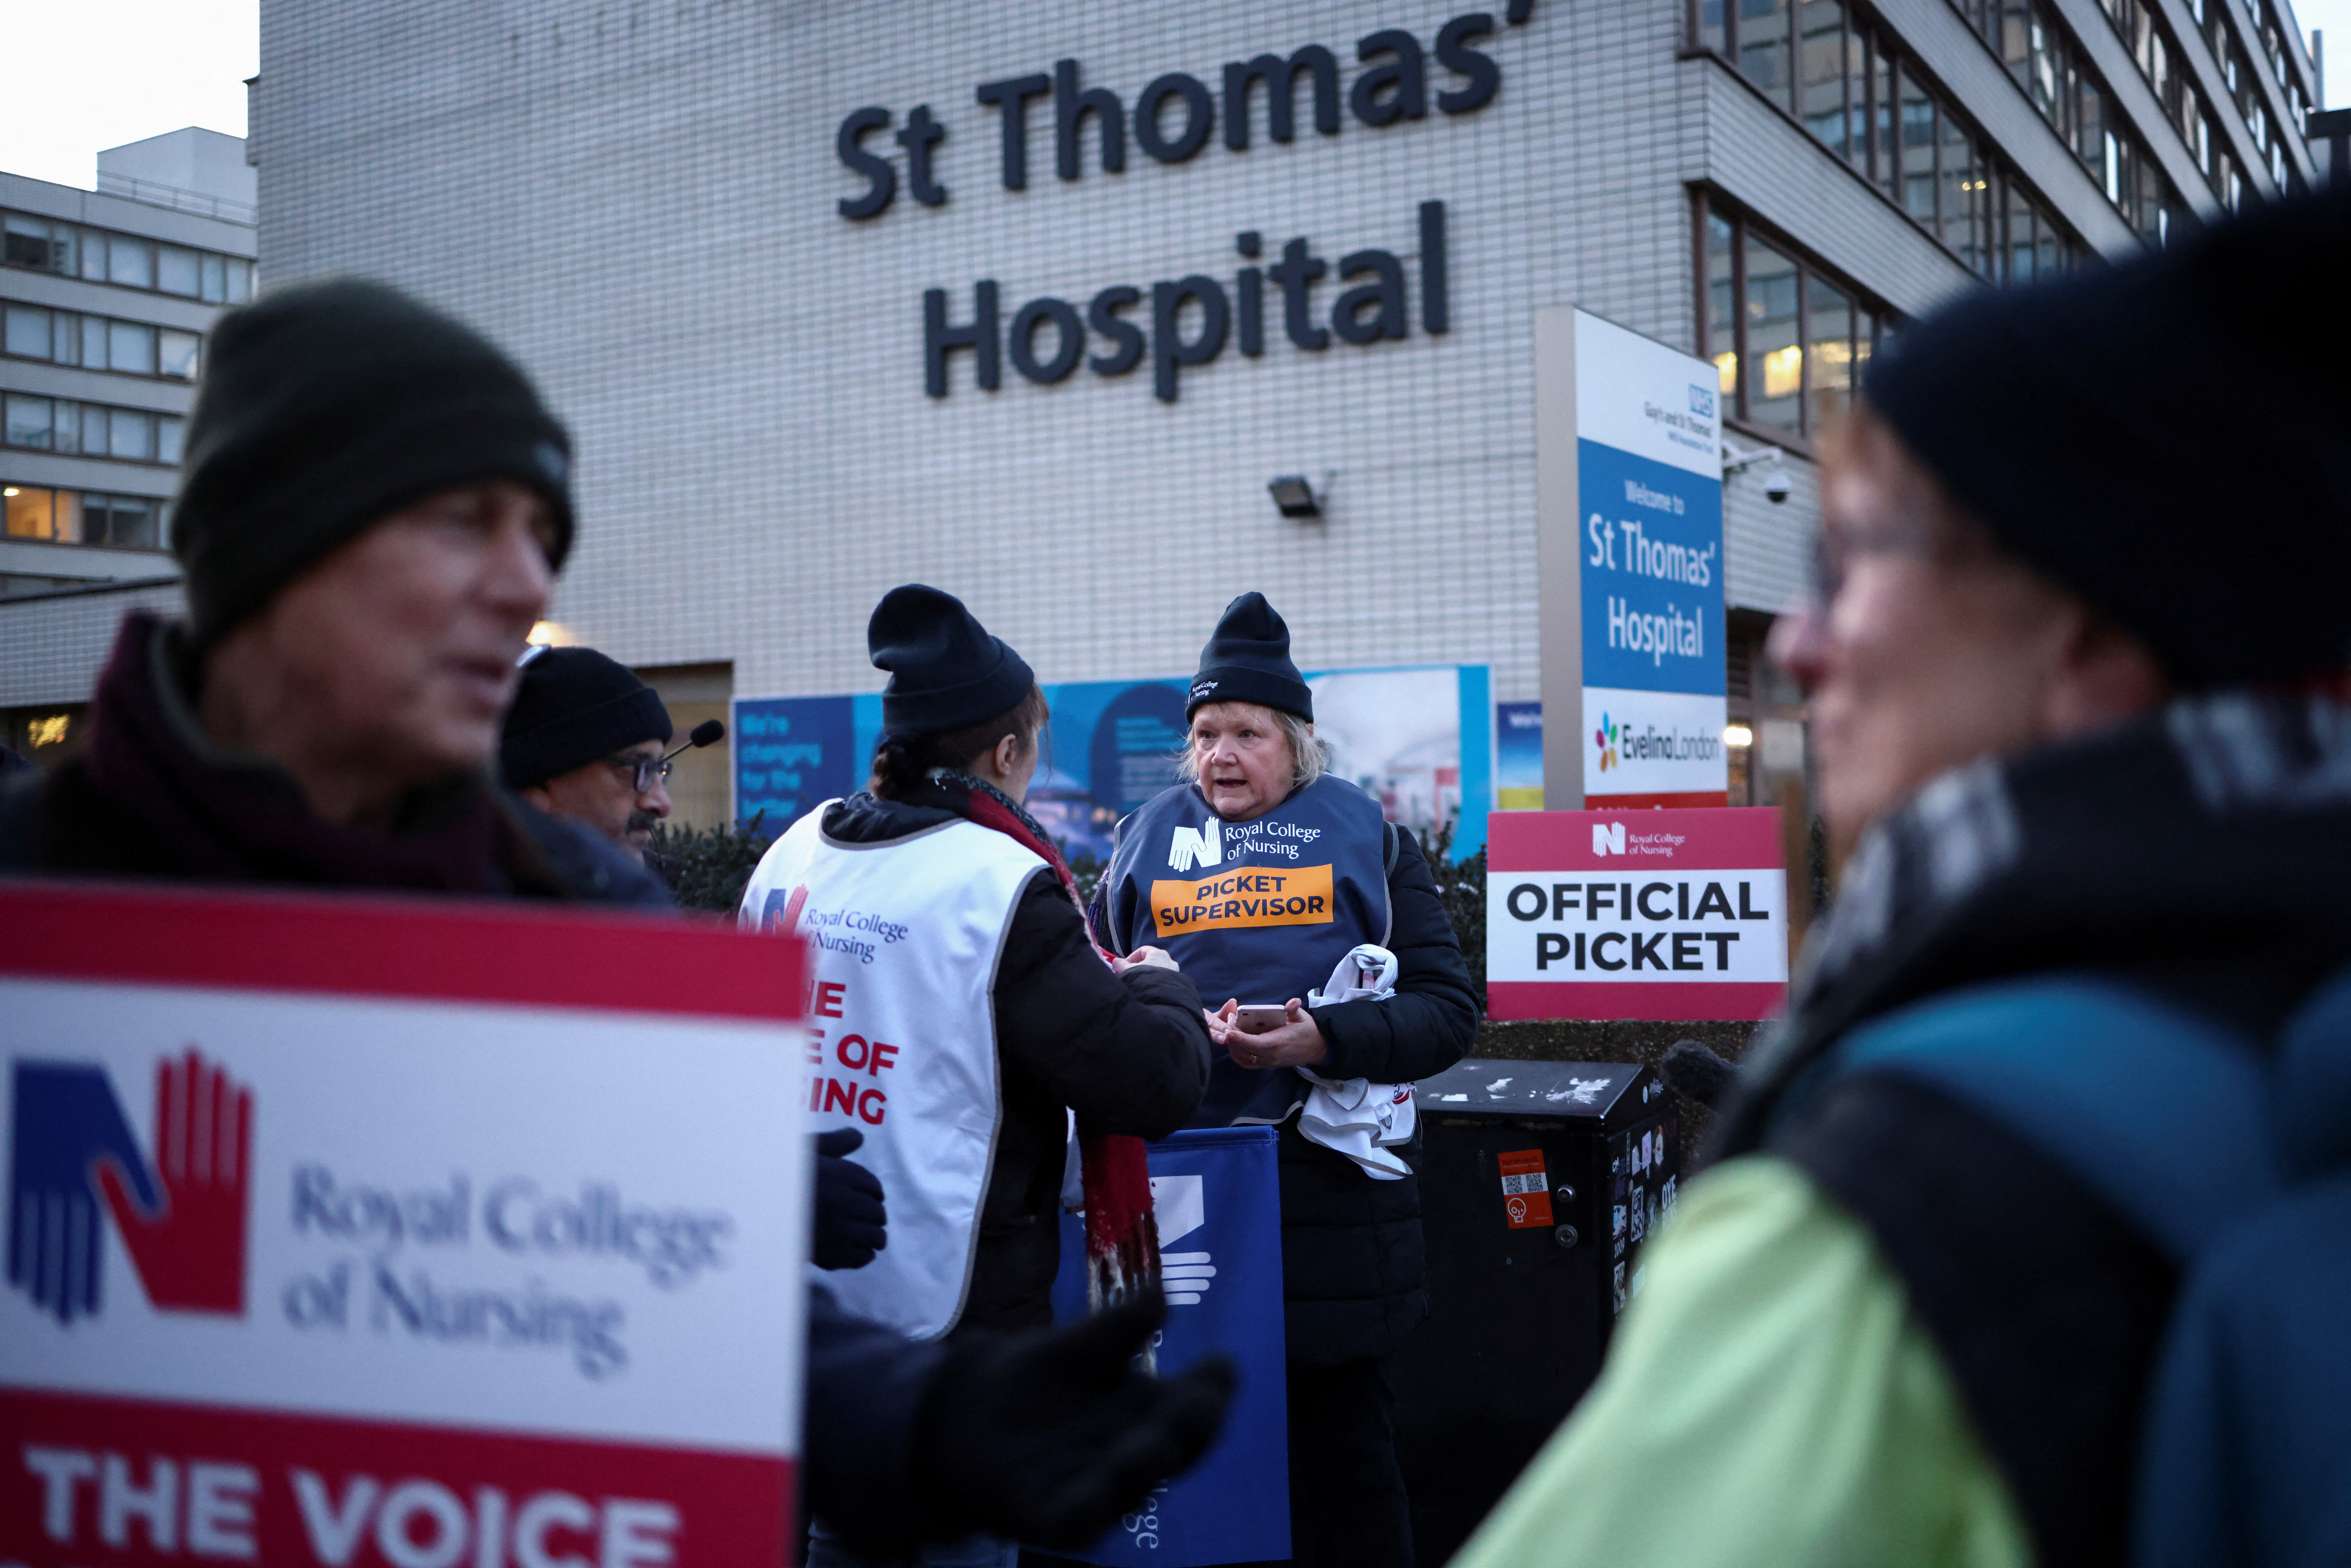 Nurses strike outside St Thomas' Hospital in London